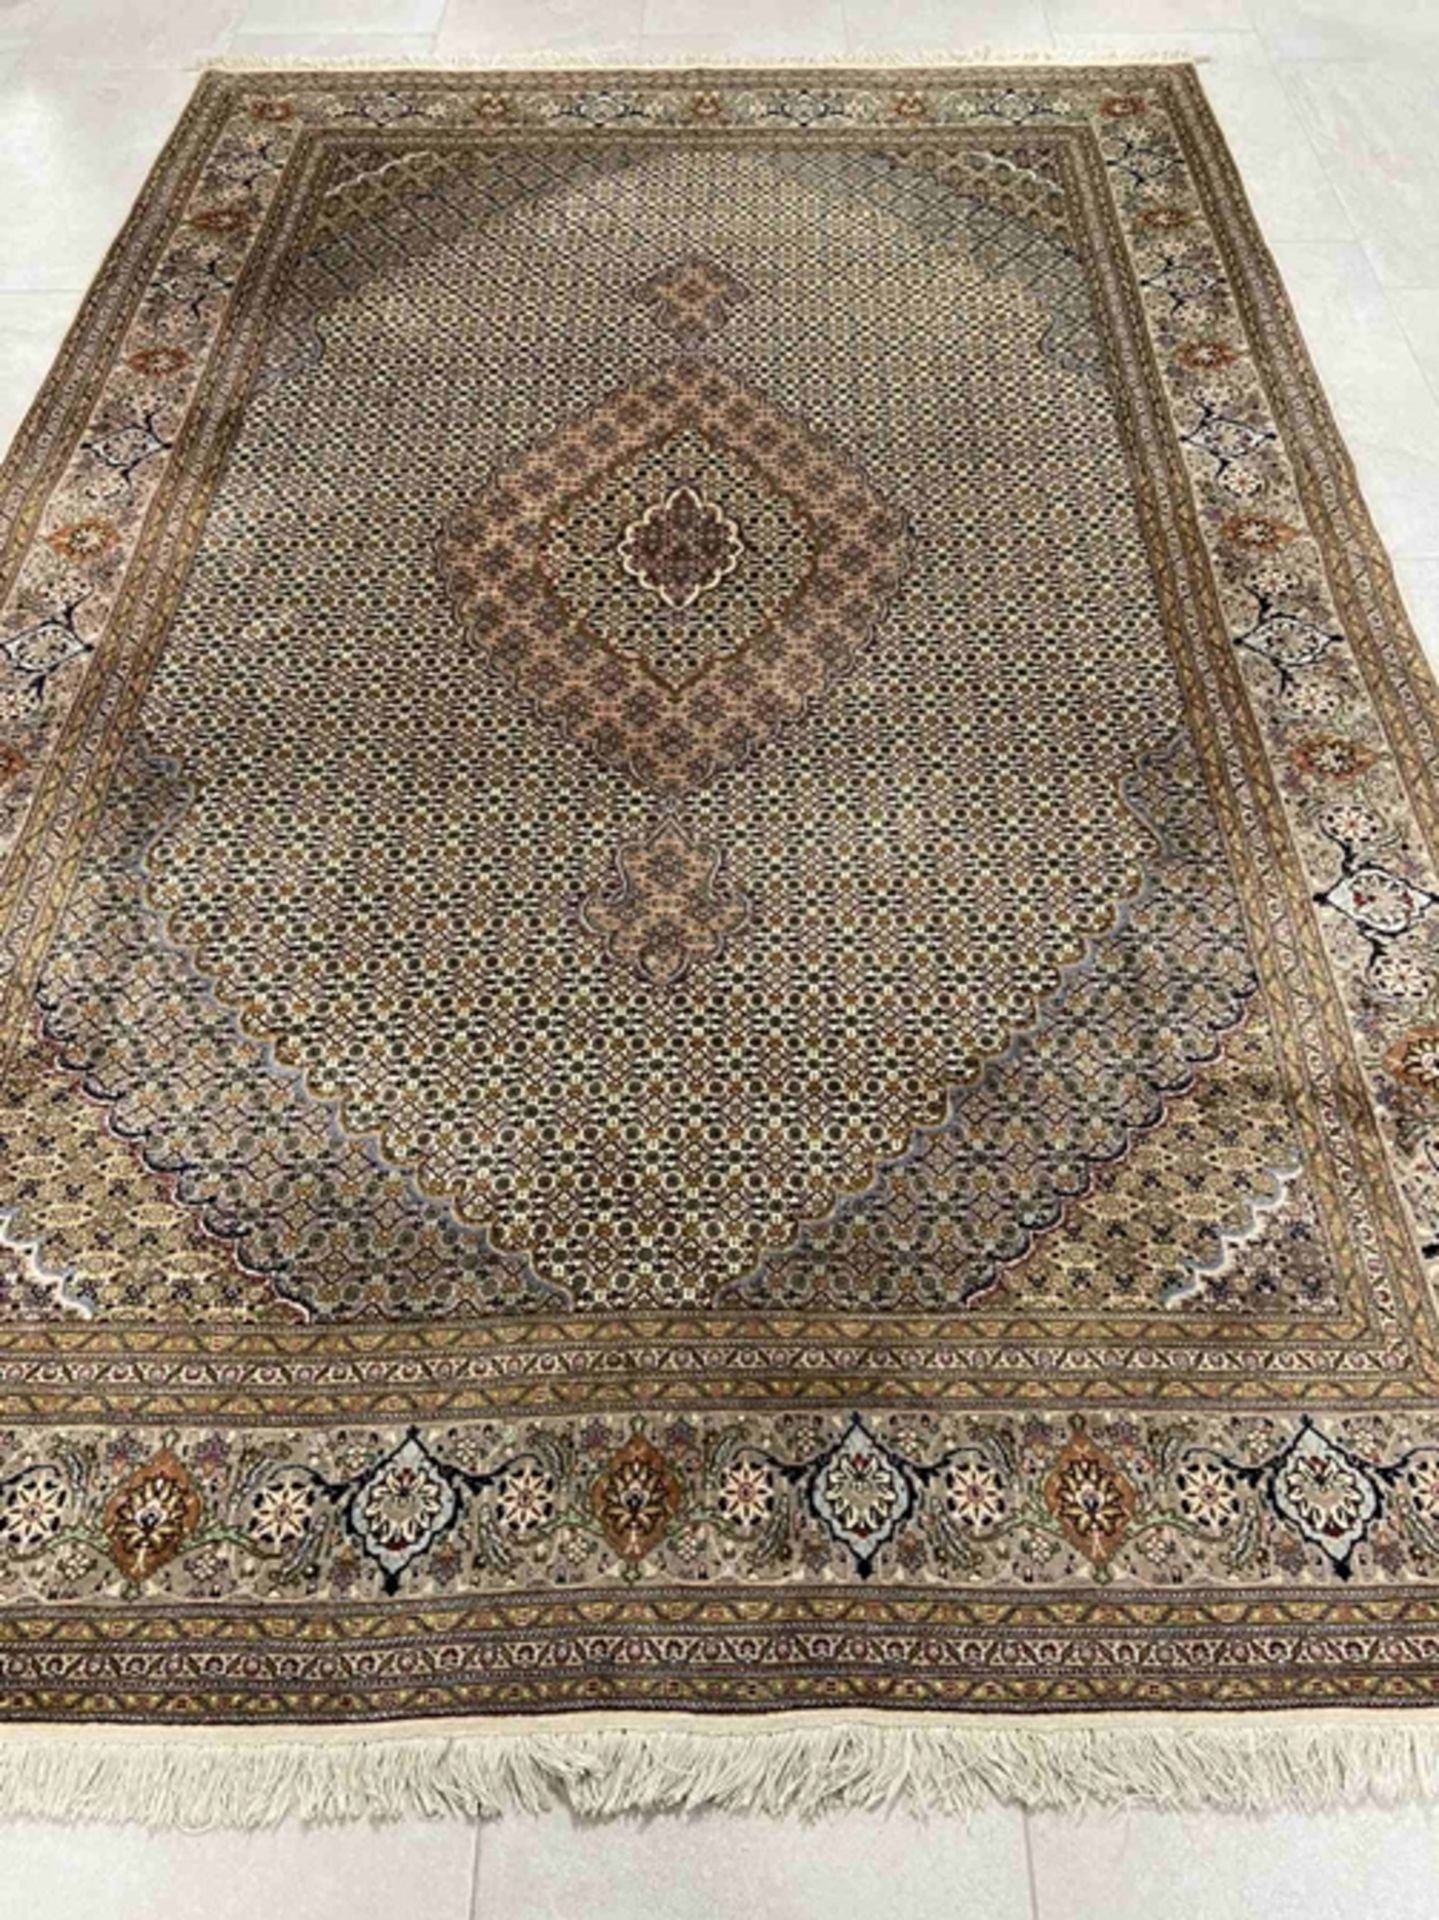 Tabriz Persian carpet, cork wool with silk, 50 Raj - 300 x 200cm - Image 2 of 5